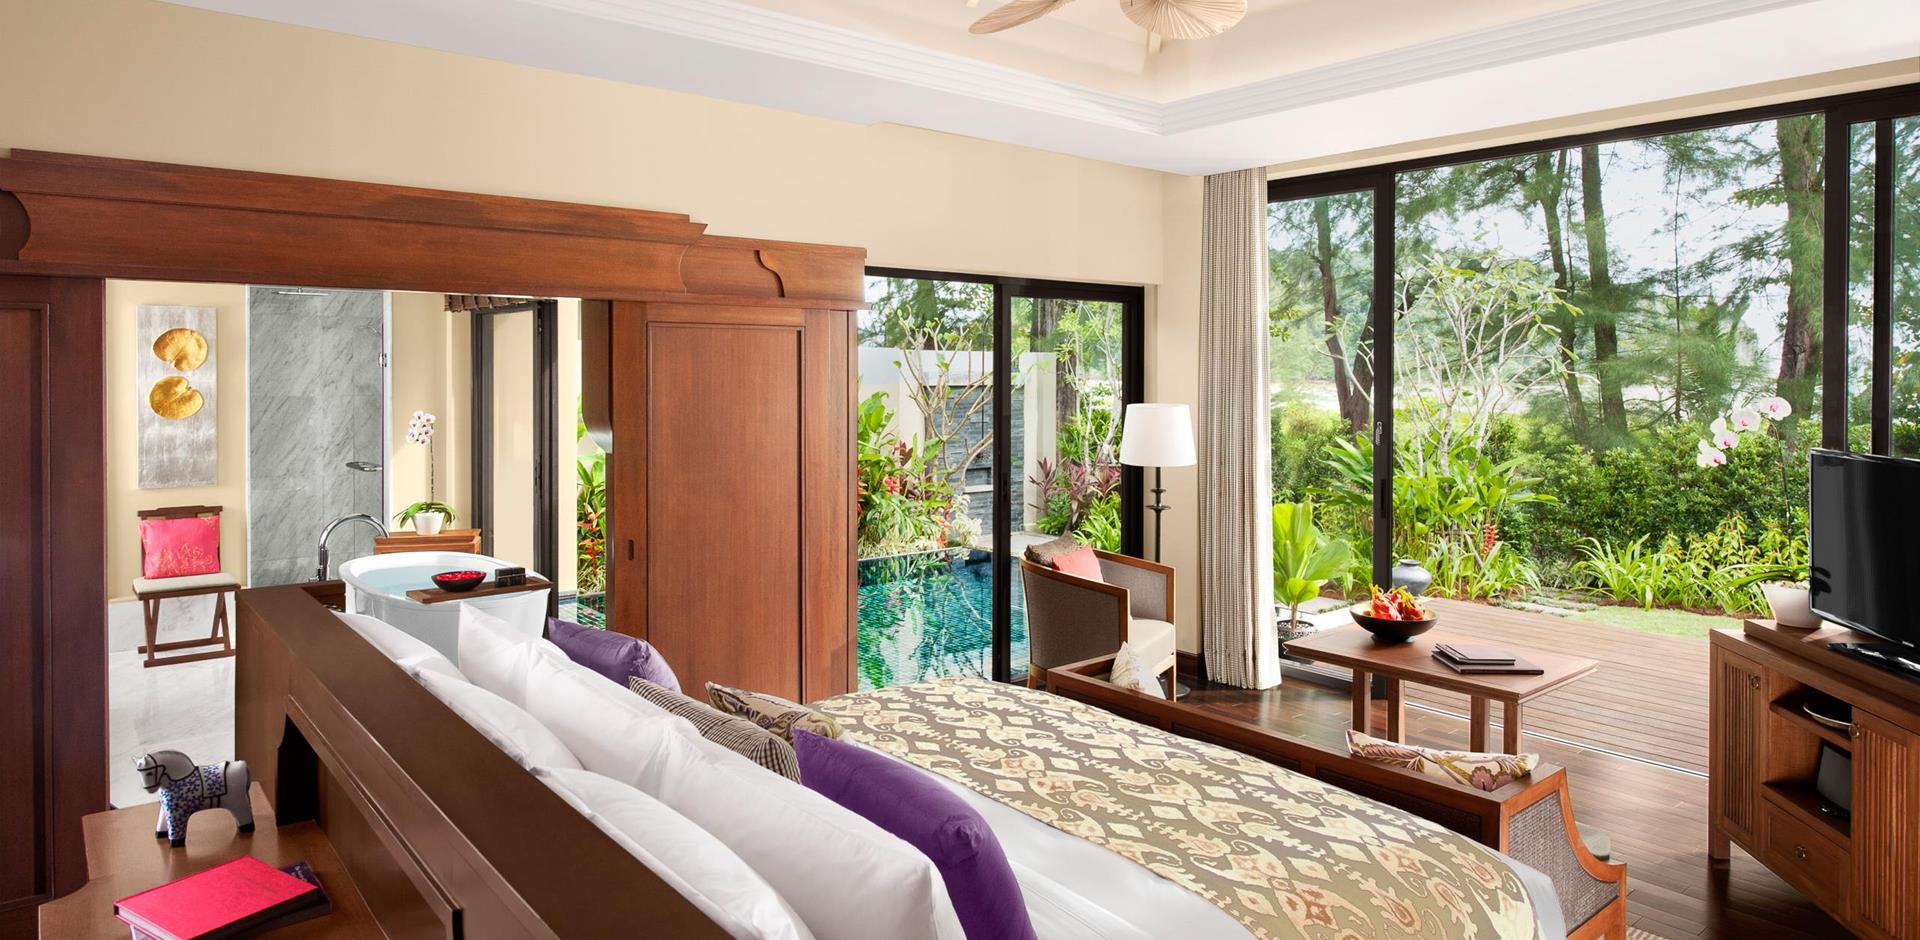 Bedroom view, Anantara Layan Phuket Resort, Thailand